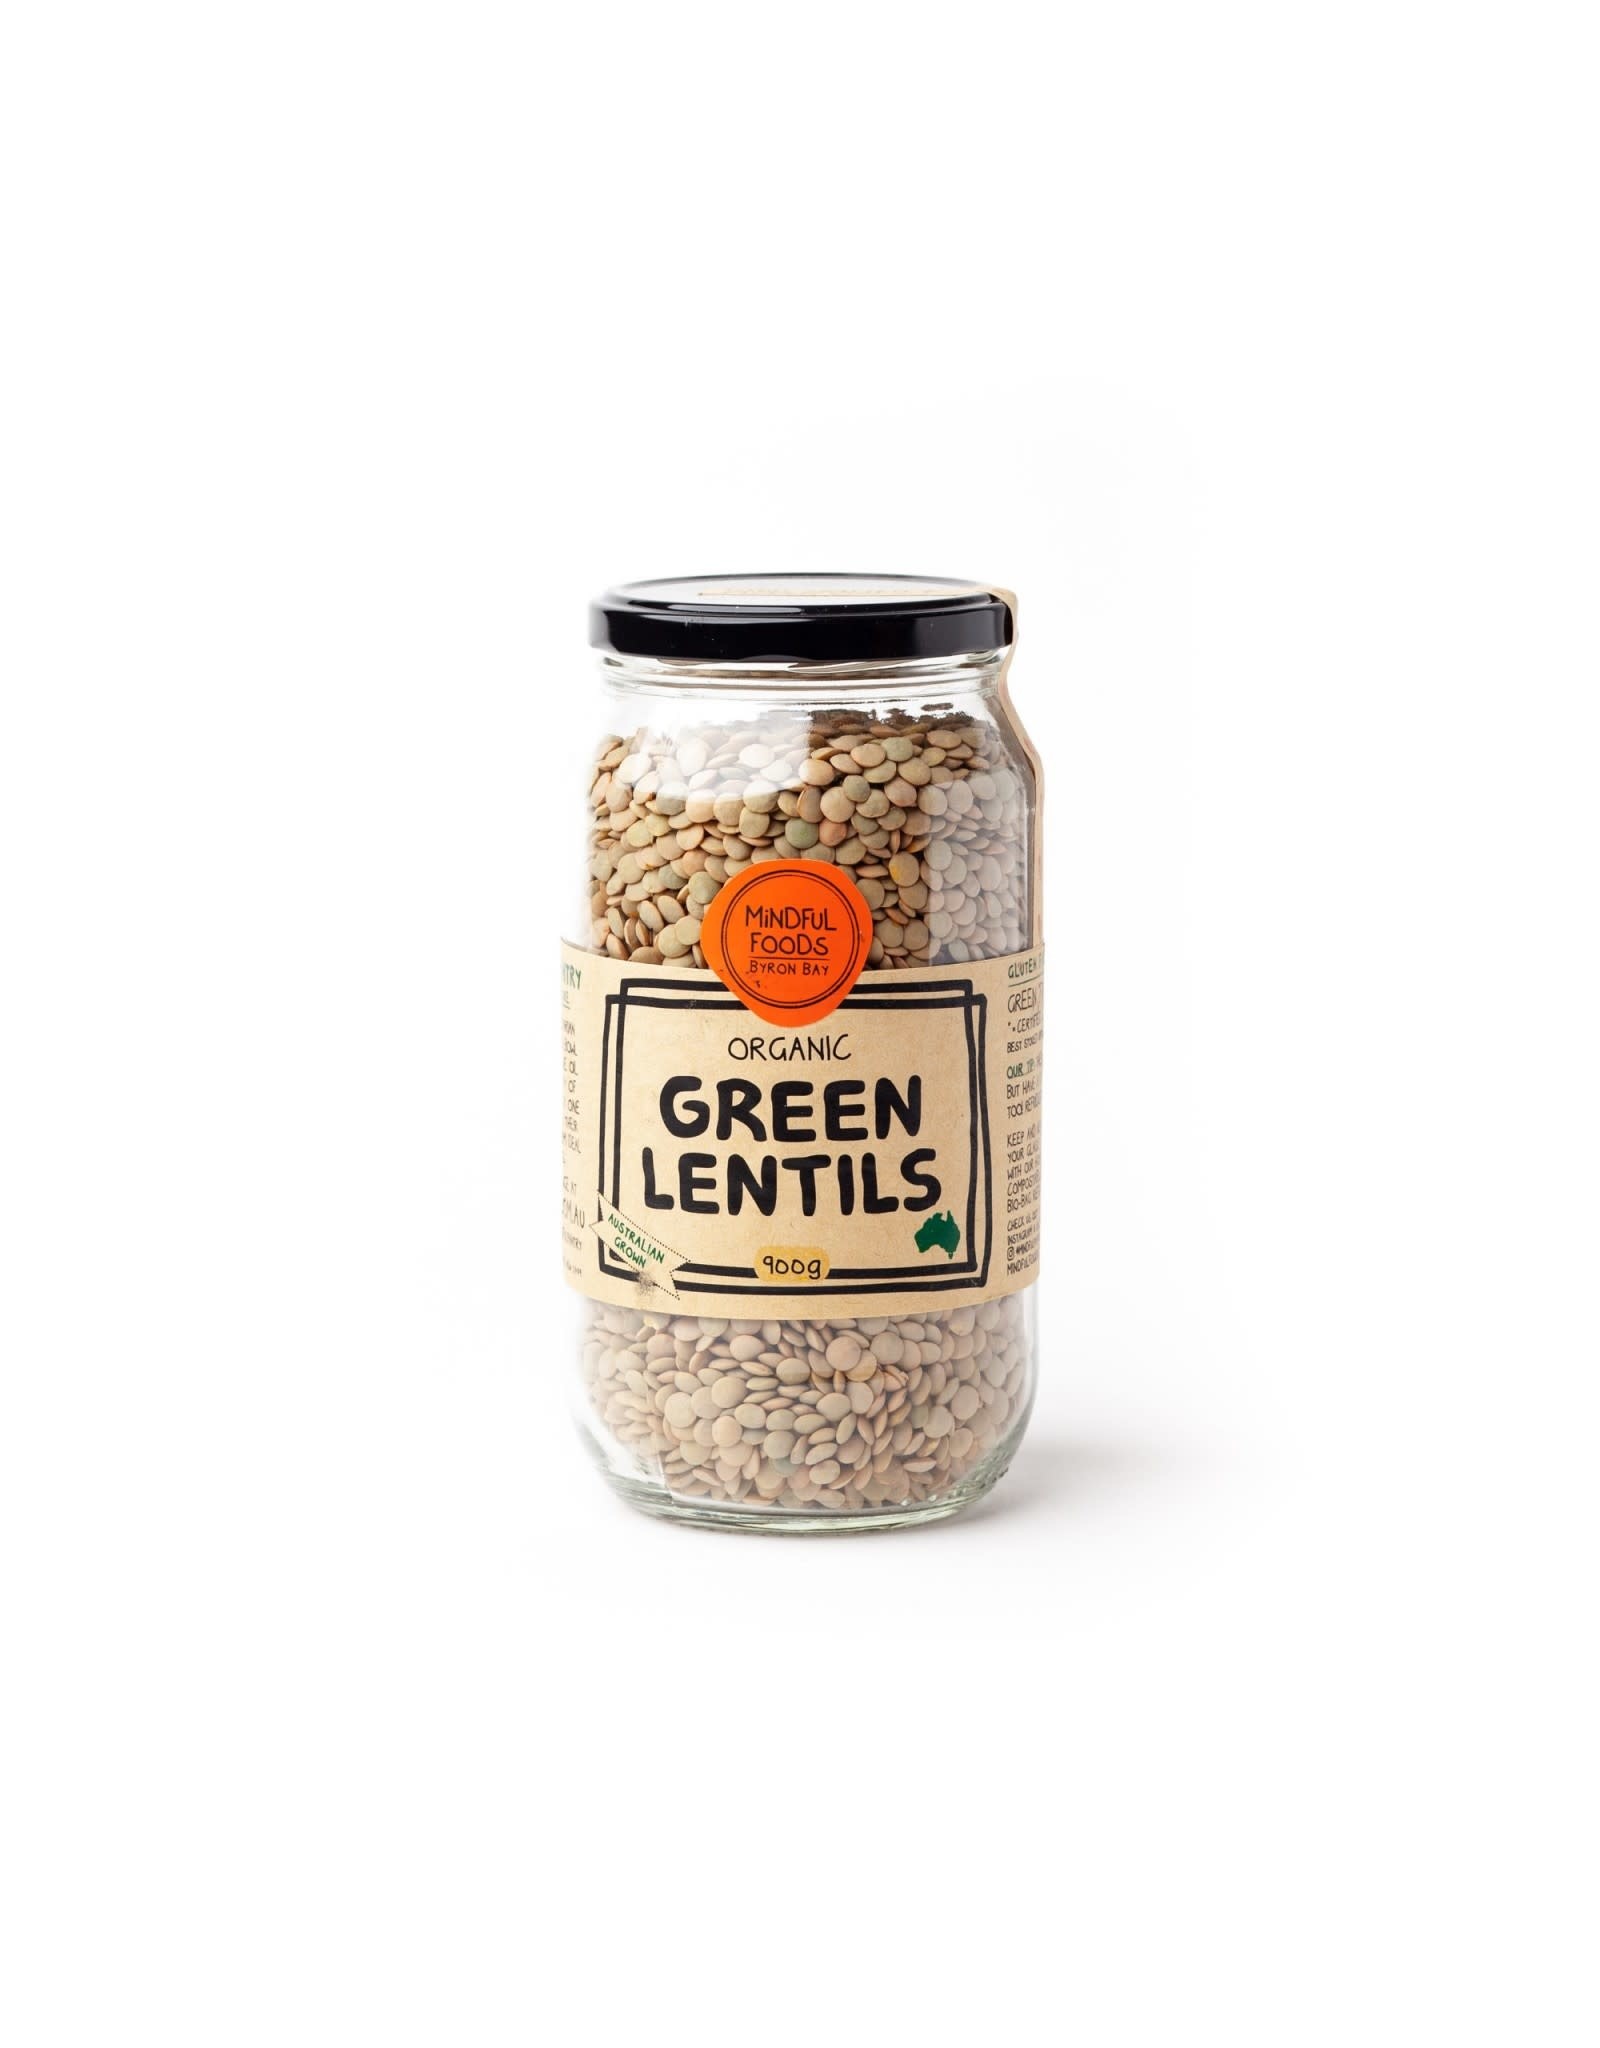 Buy Mindful Foods Online Organic Green Lentils 900g